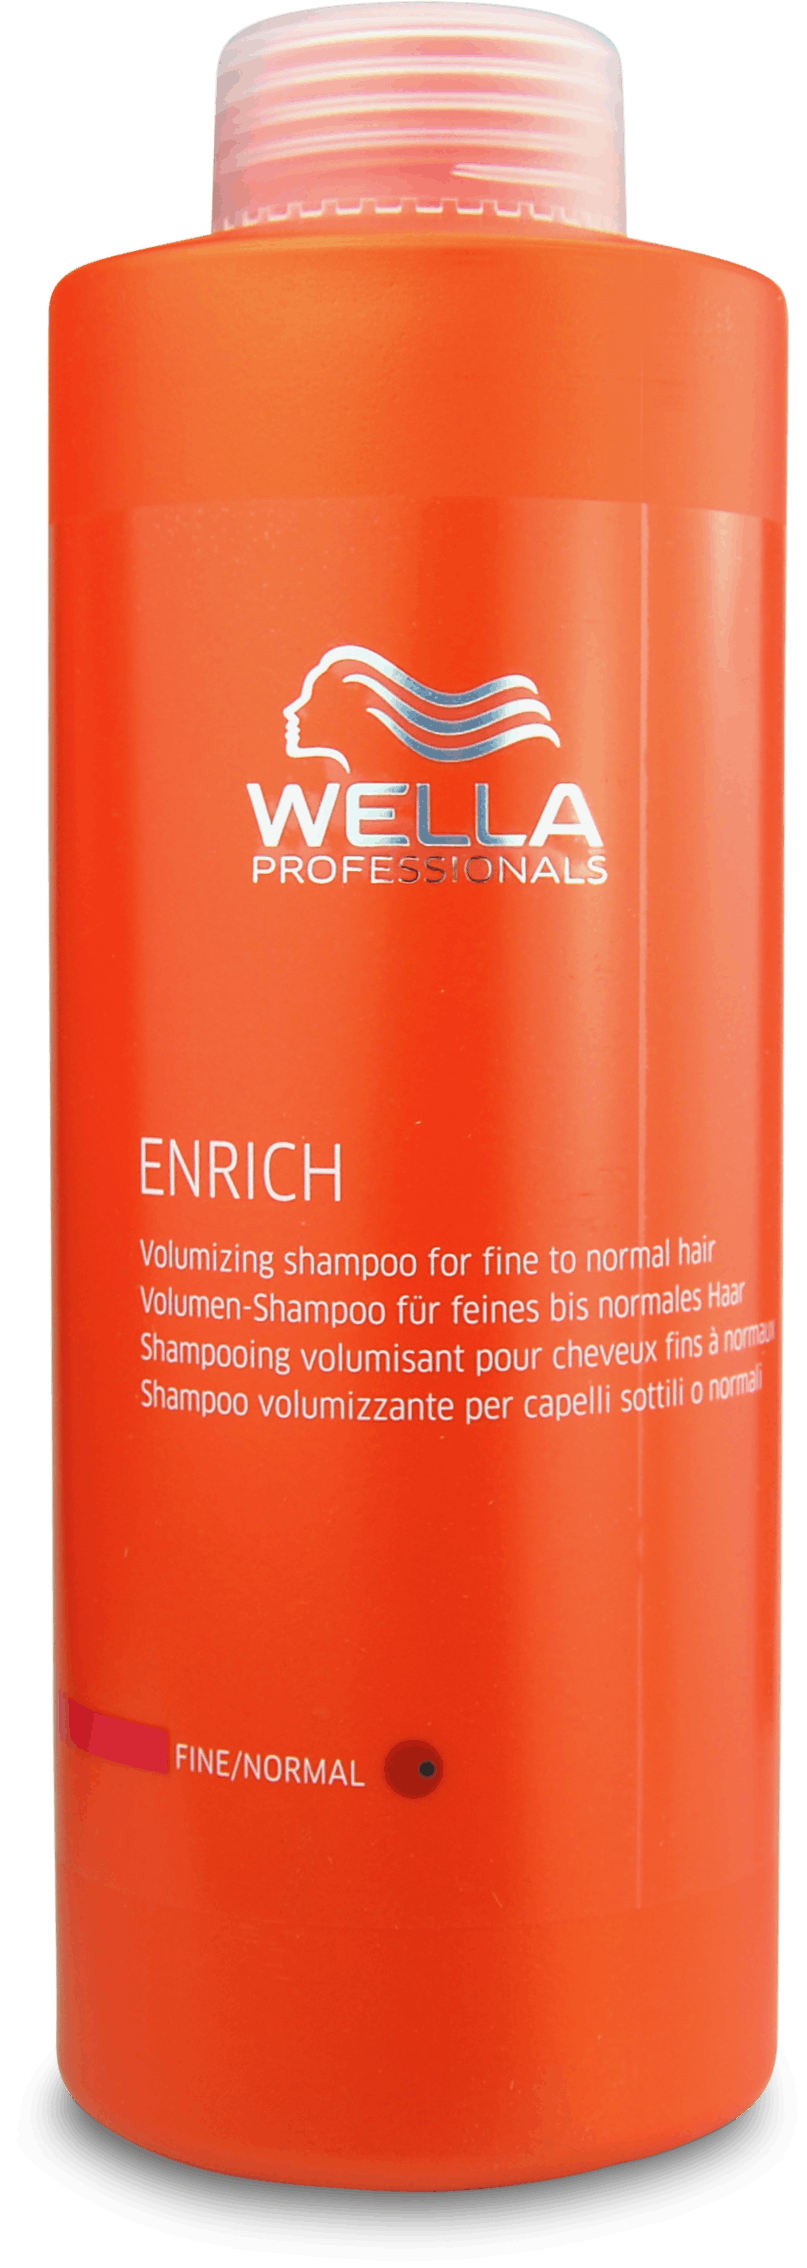 wella shampoo for fine hair